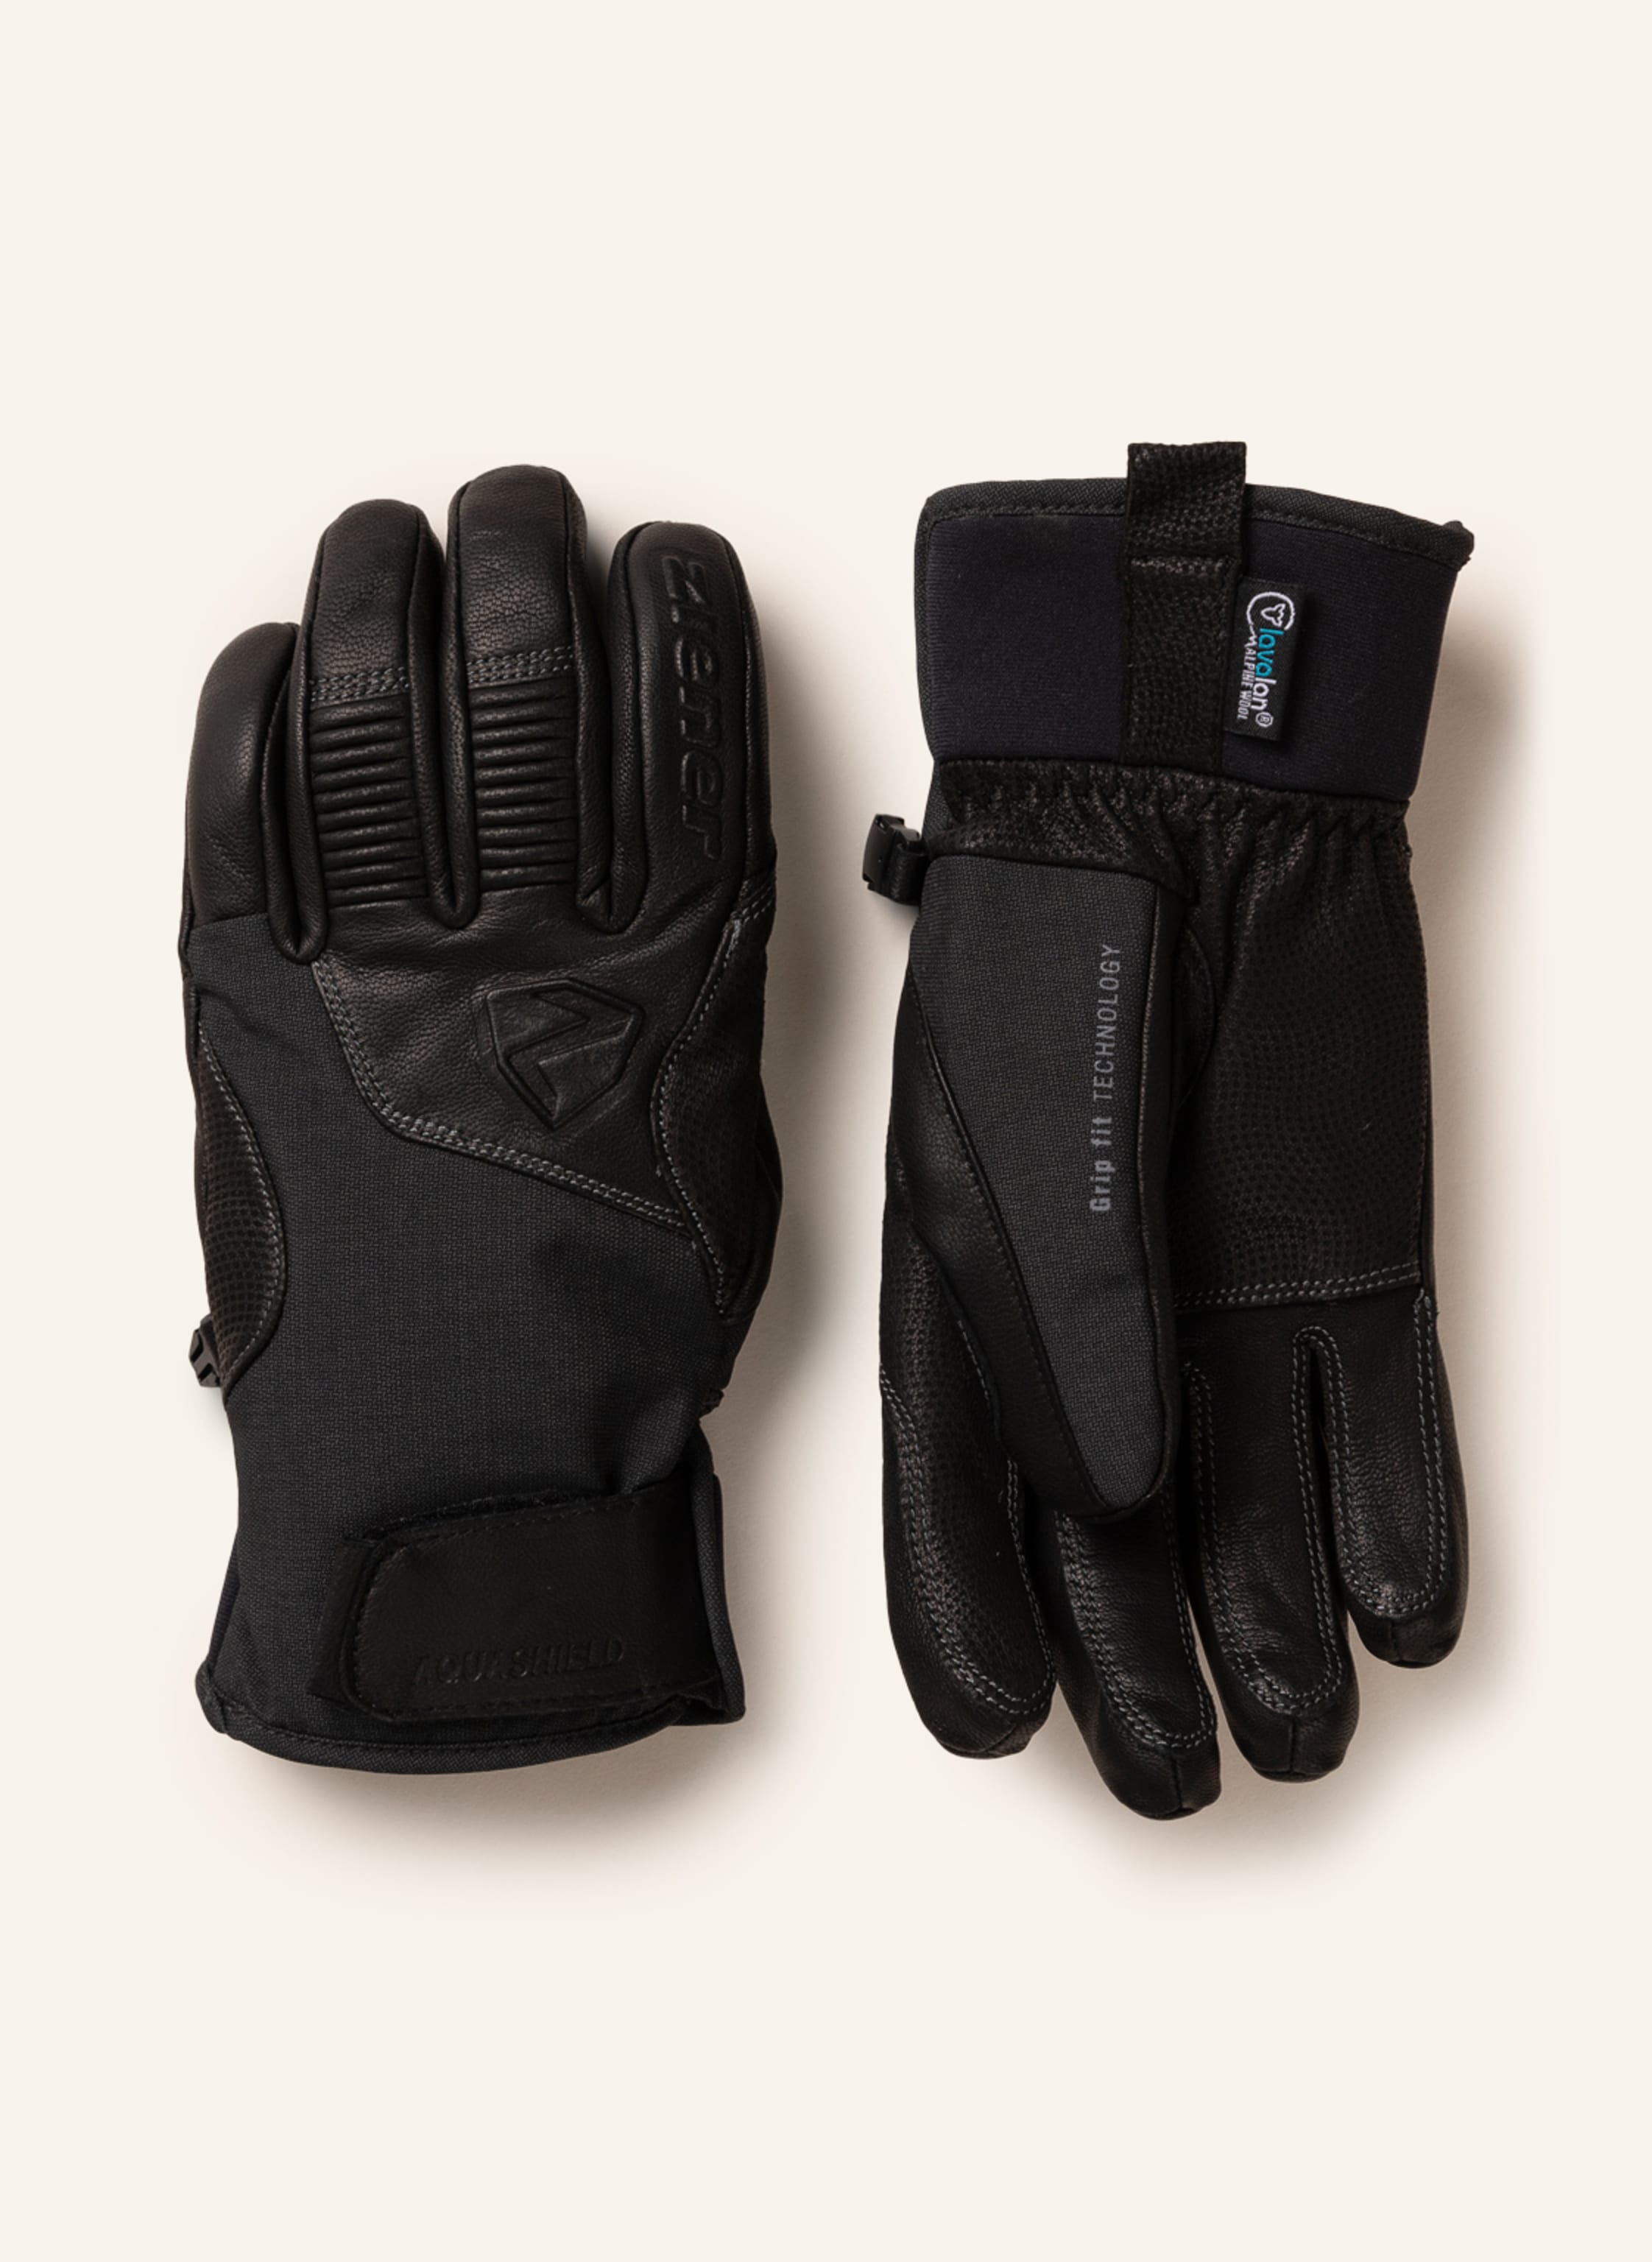 ziener in dark gloves gray GANZENBERG black/ Ski